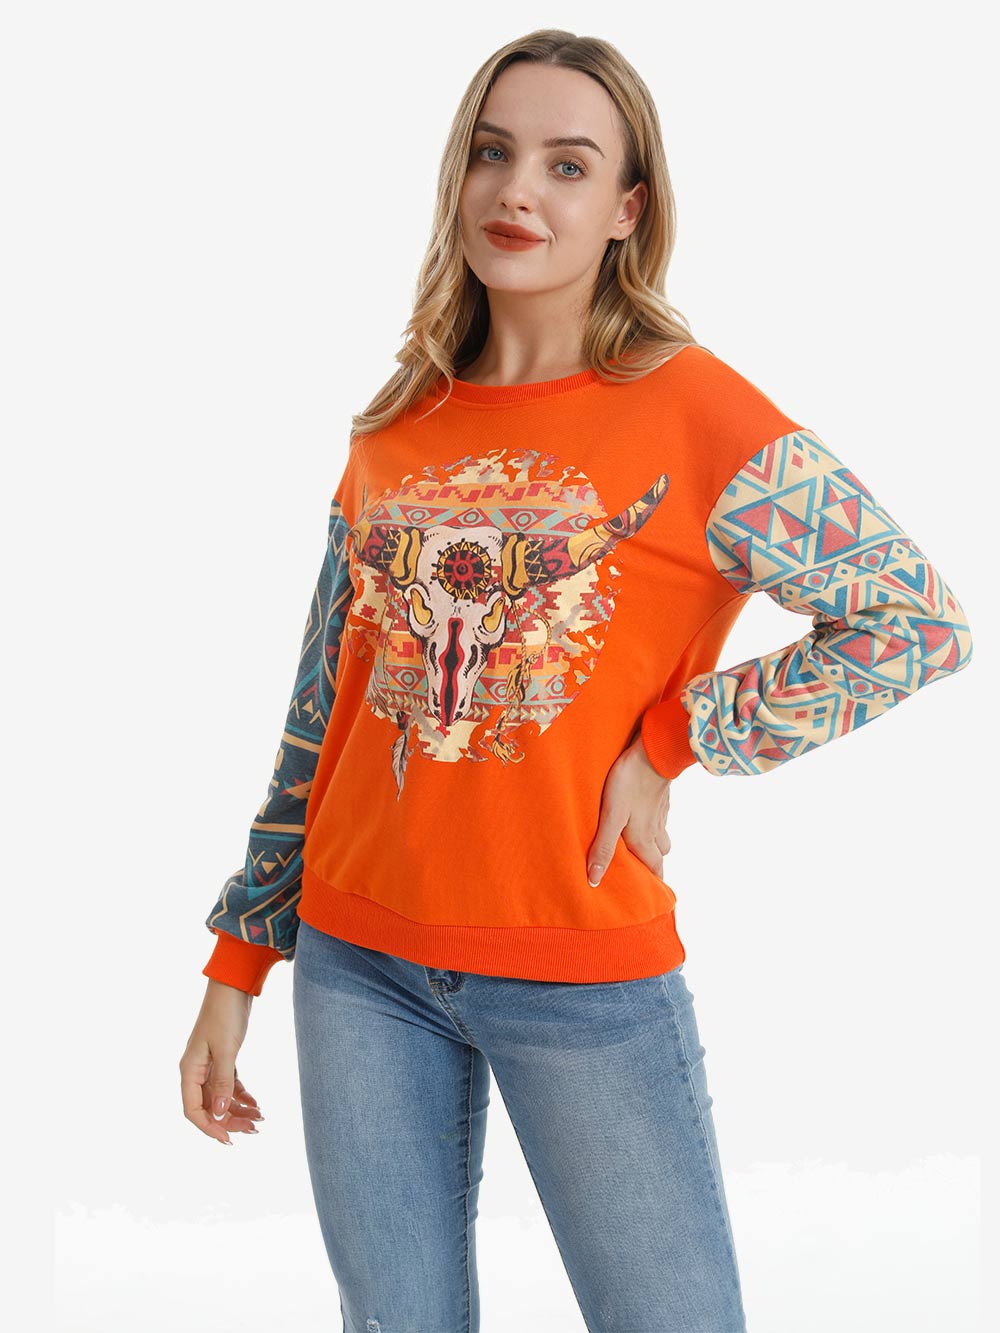 American Bling Women Bull Skull Patchwork Aztec Sweatshirt - Montana West World